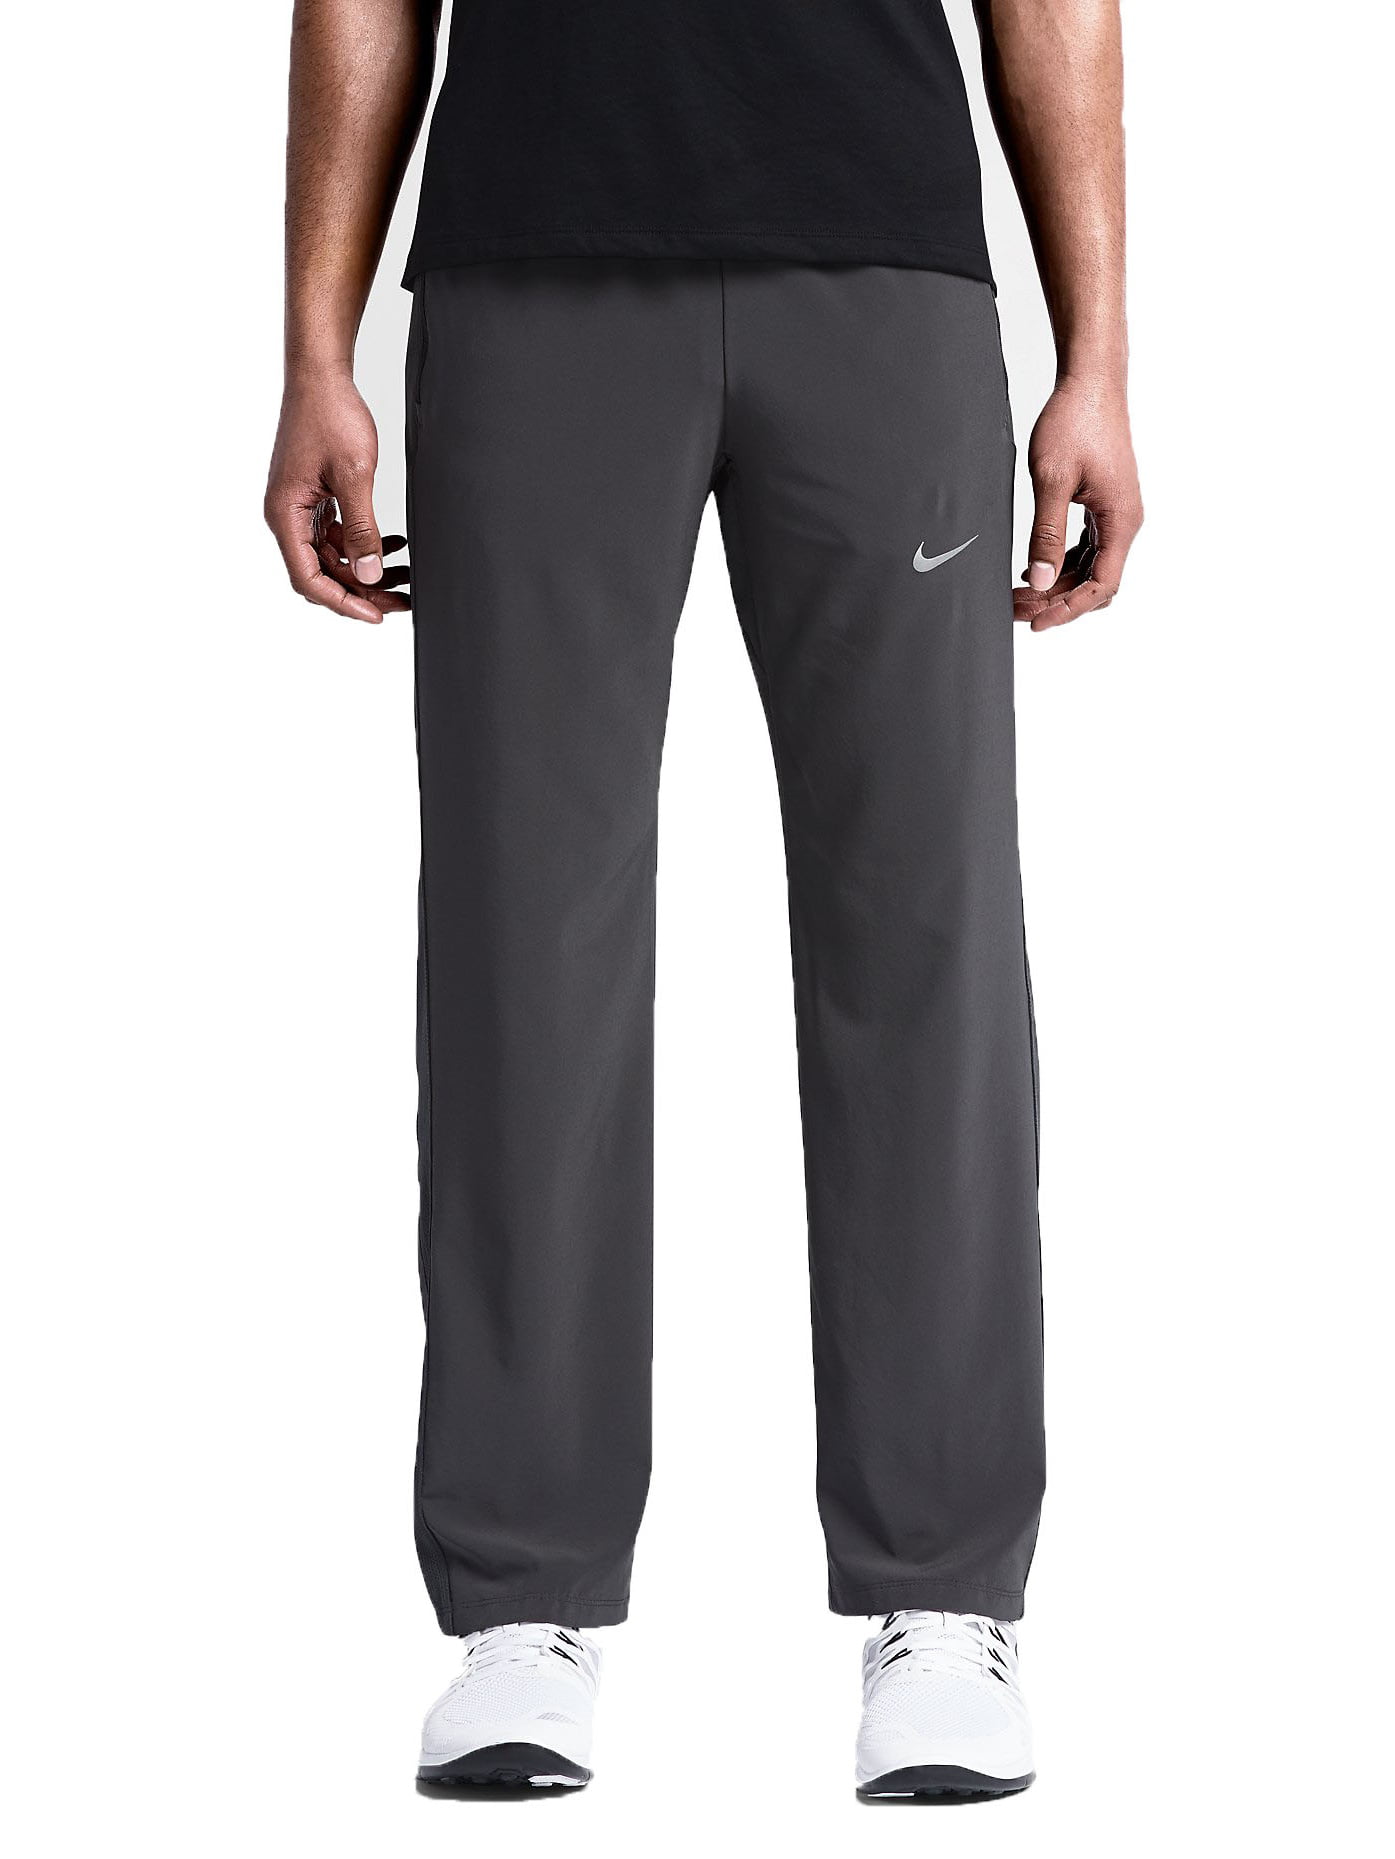 Nike Men's Dri-Fit Stretch Woven Running Pants-Dark grey - Walmart.com